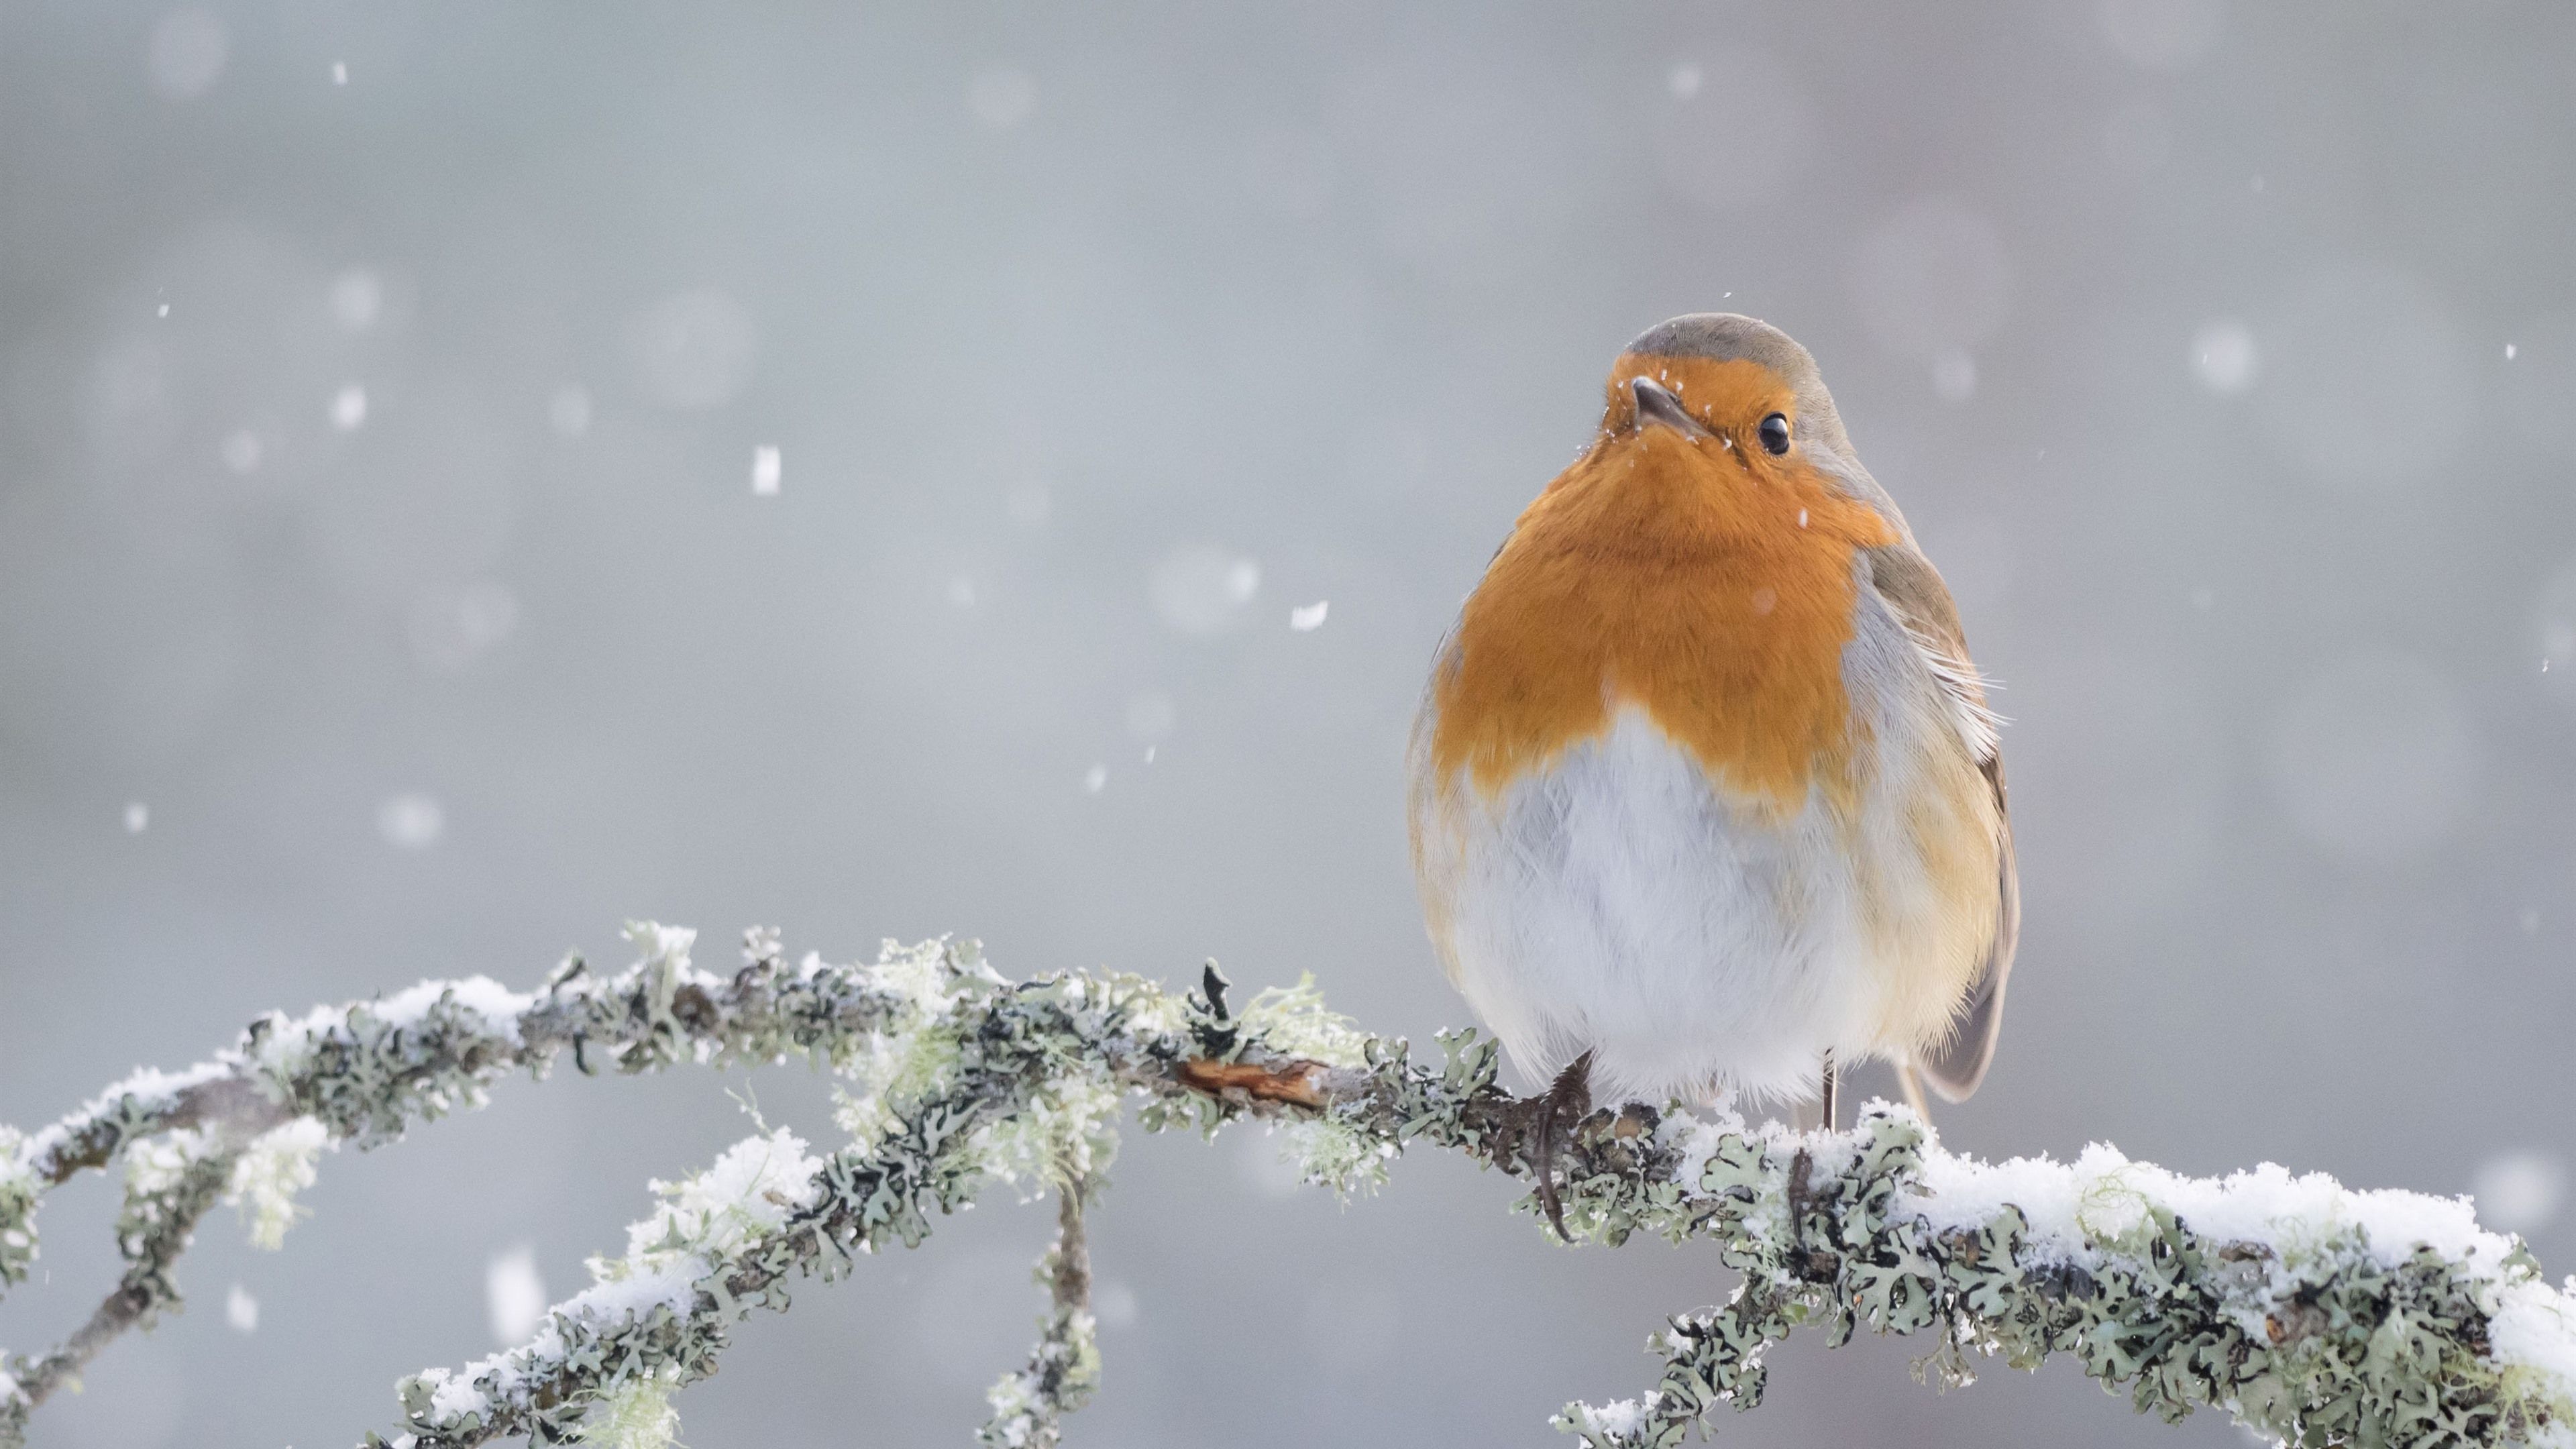 Wallpaper Robin, bird, snow, winter, tree branch 3840x2160 UHD 4K Picture, Image